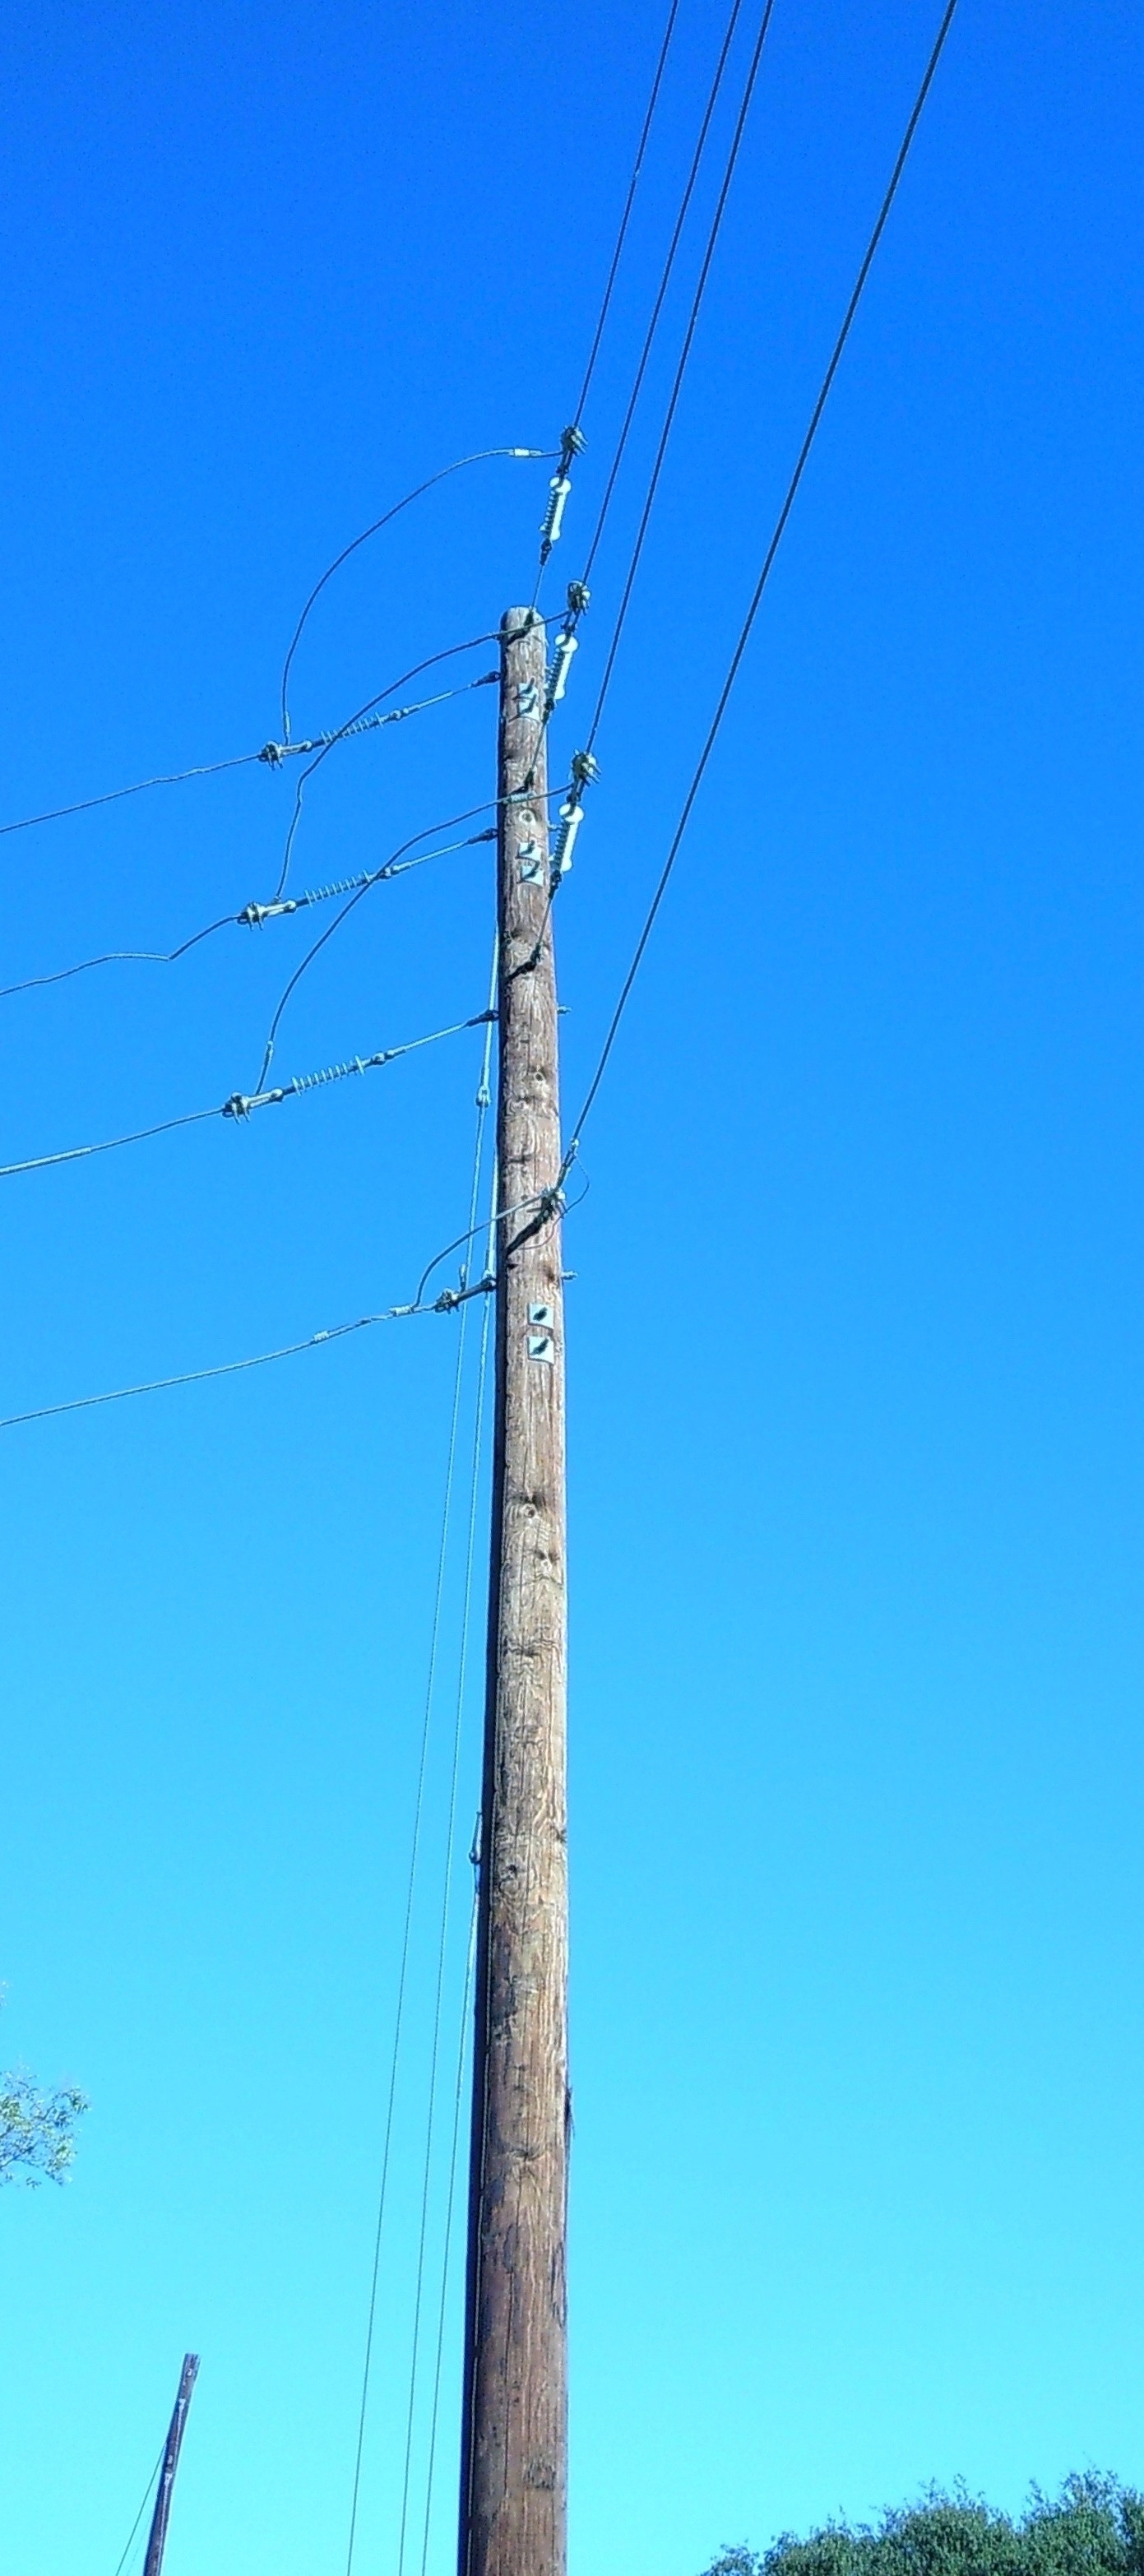 Telephone pole on blue sunny skyline. 